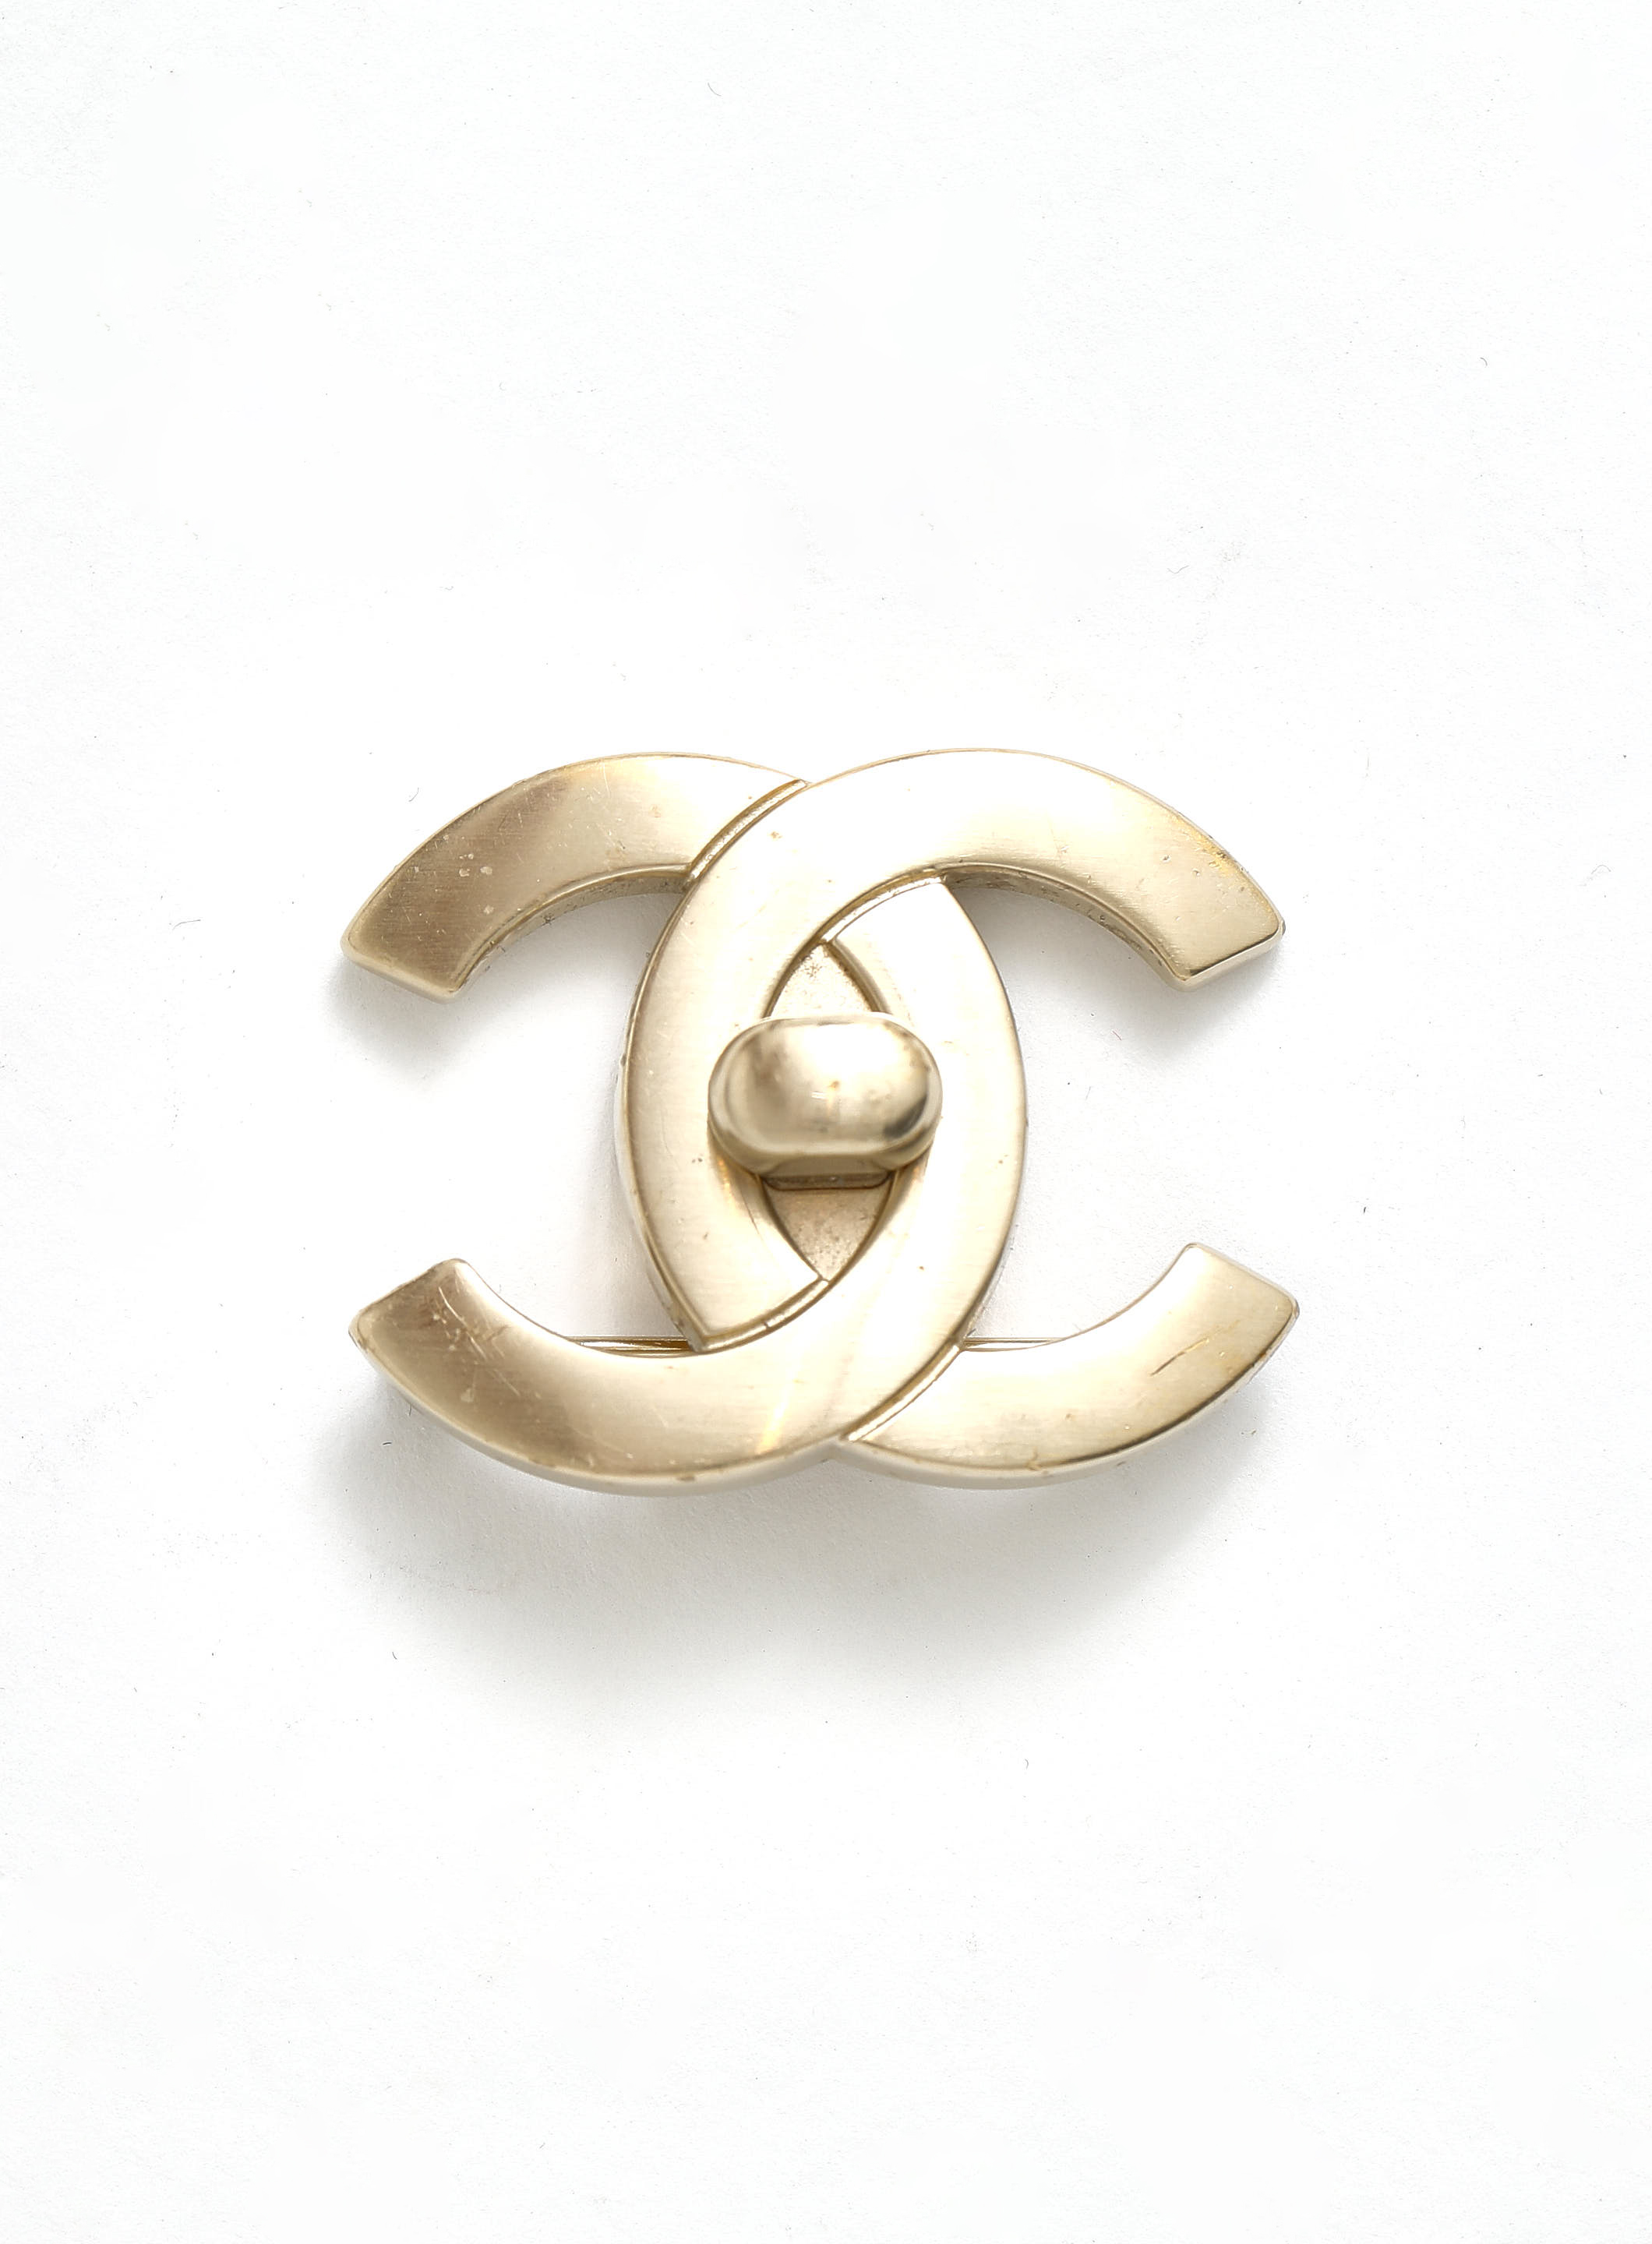 Chanel Vintage Turn-Lock Logo Brooch (Silver)